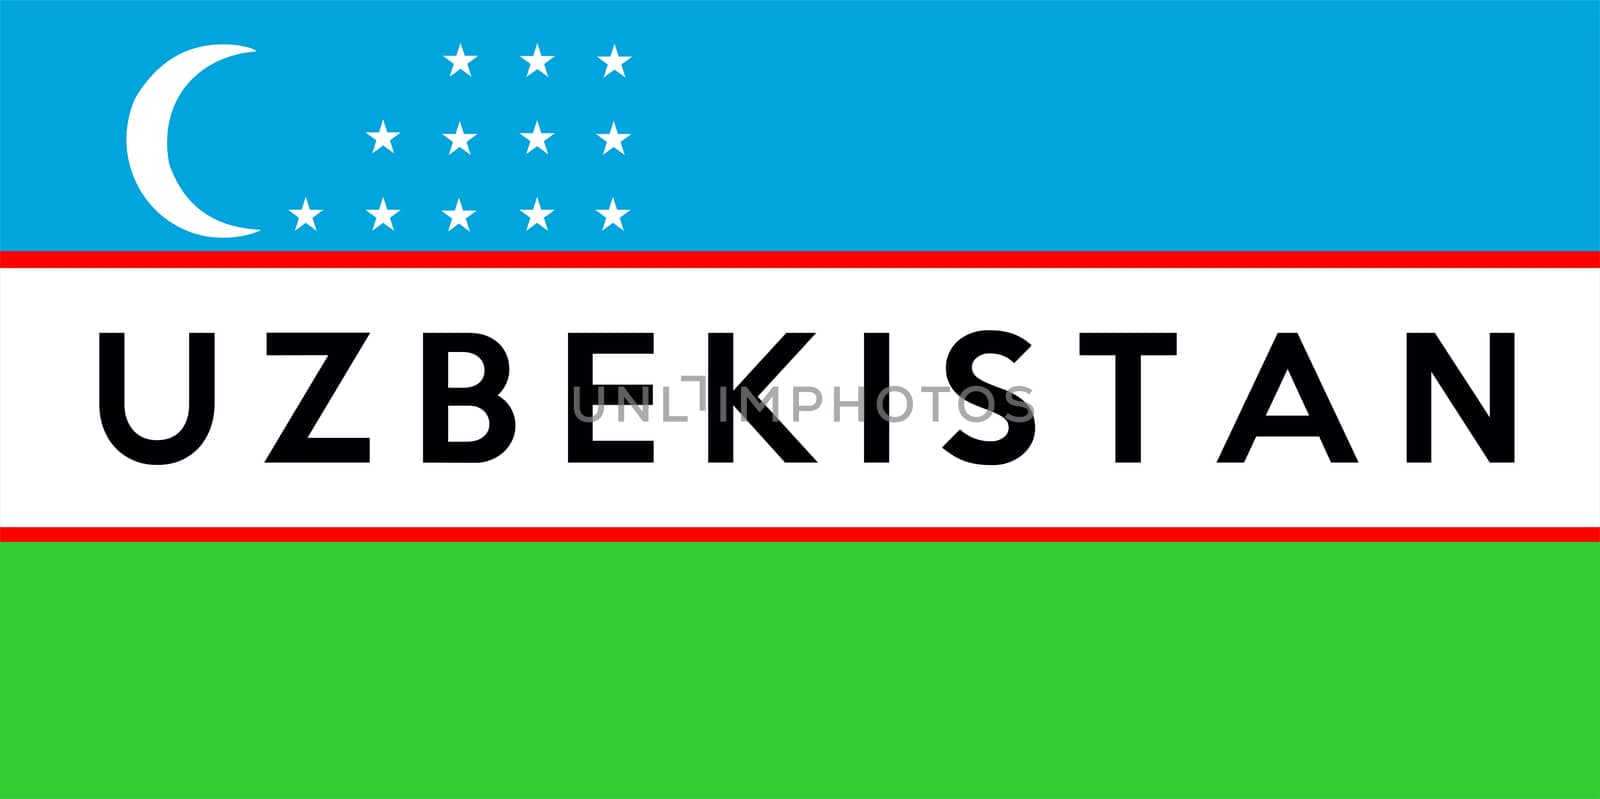 very big size illustration country flag of Uzbekistan